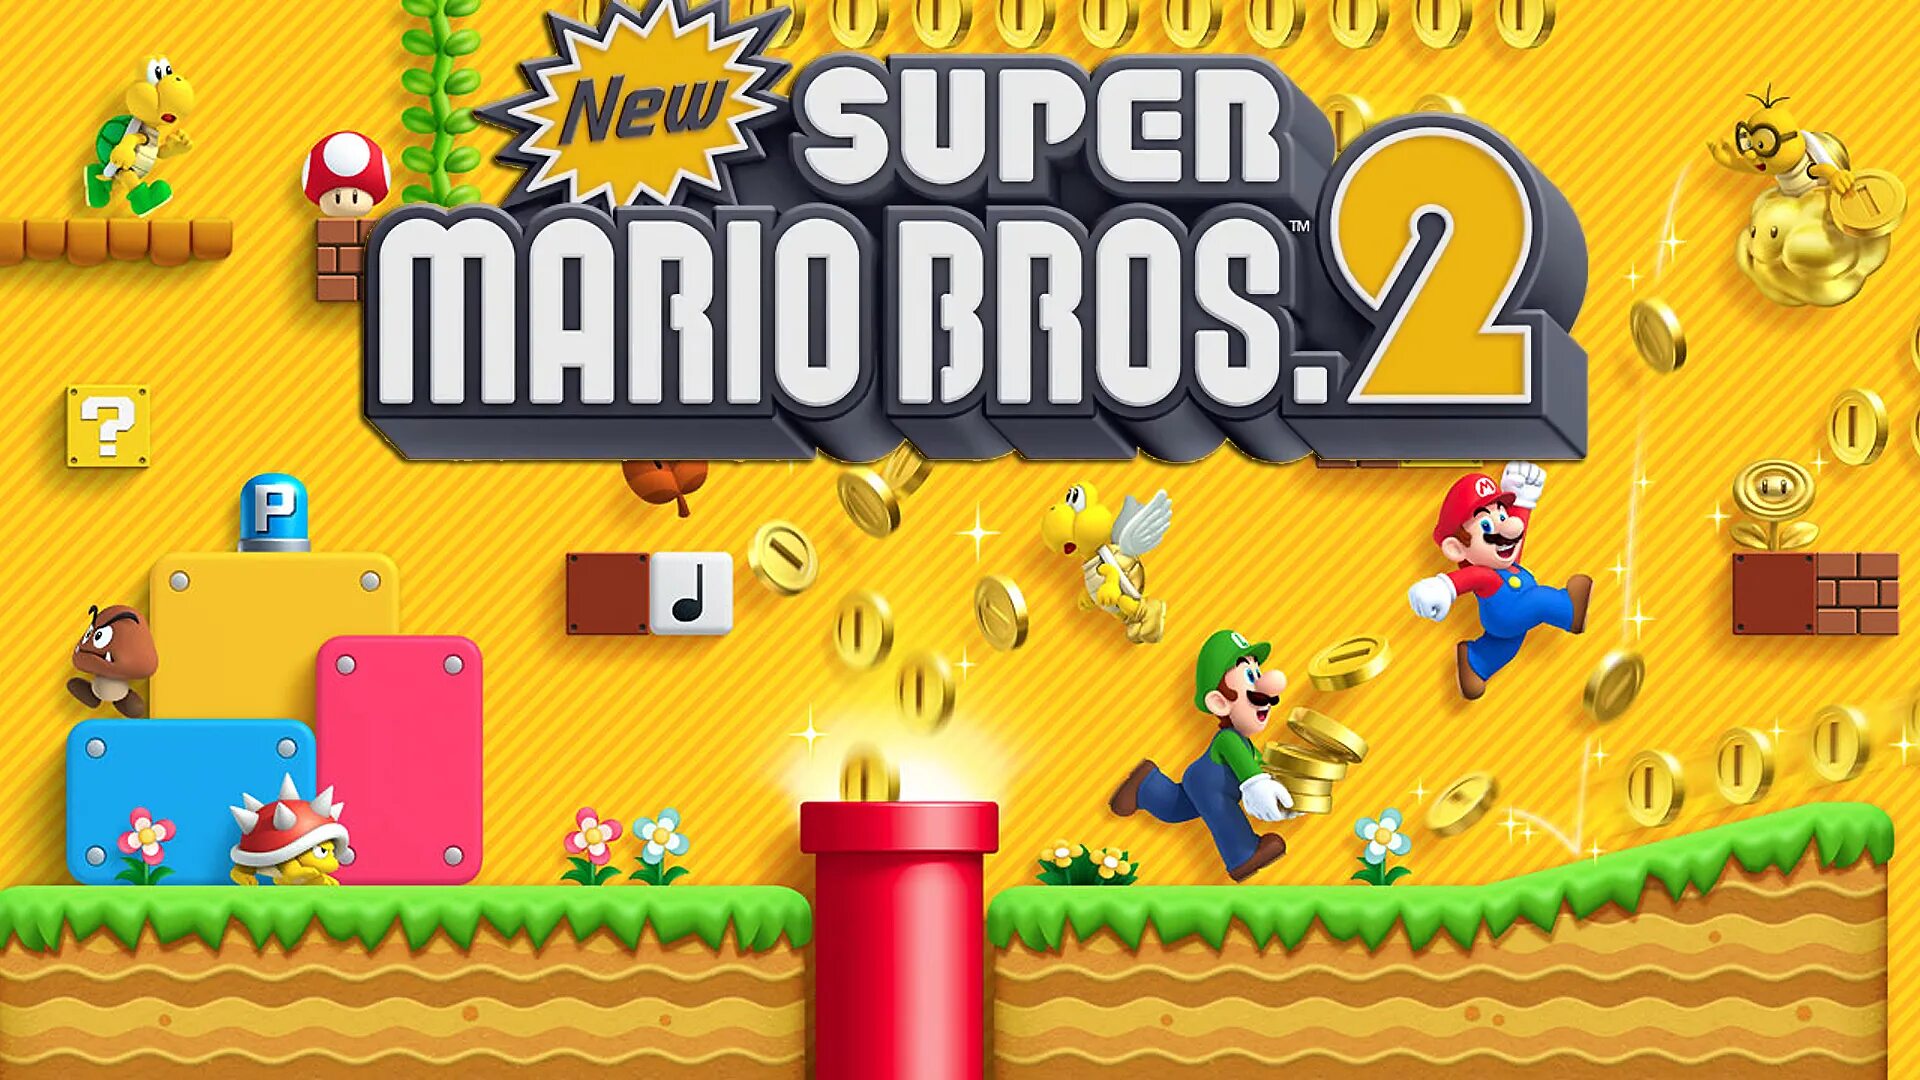 Mario bros theme. New super Mario Bros 2 Nintendo 3ds. New super Mario Bros. Нинтендо ДС. New super Mario Bros 2 Wii. New super Mario Bros Nintendo DS.